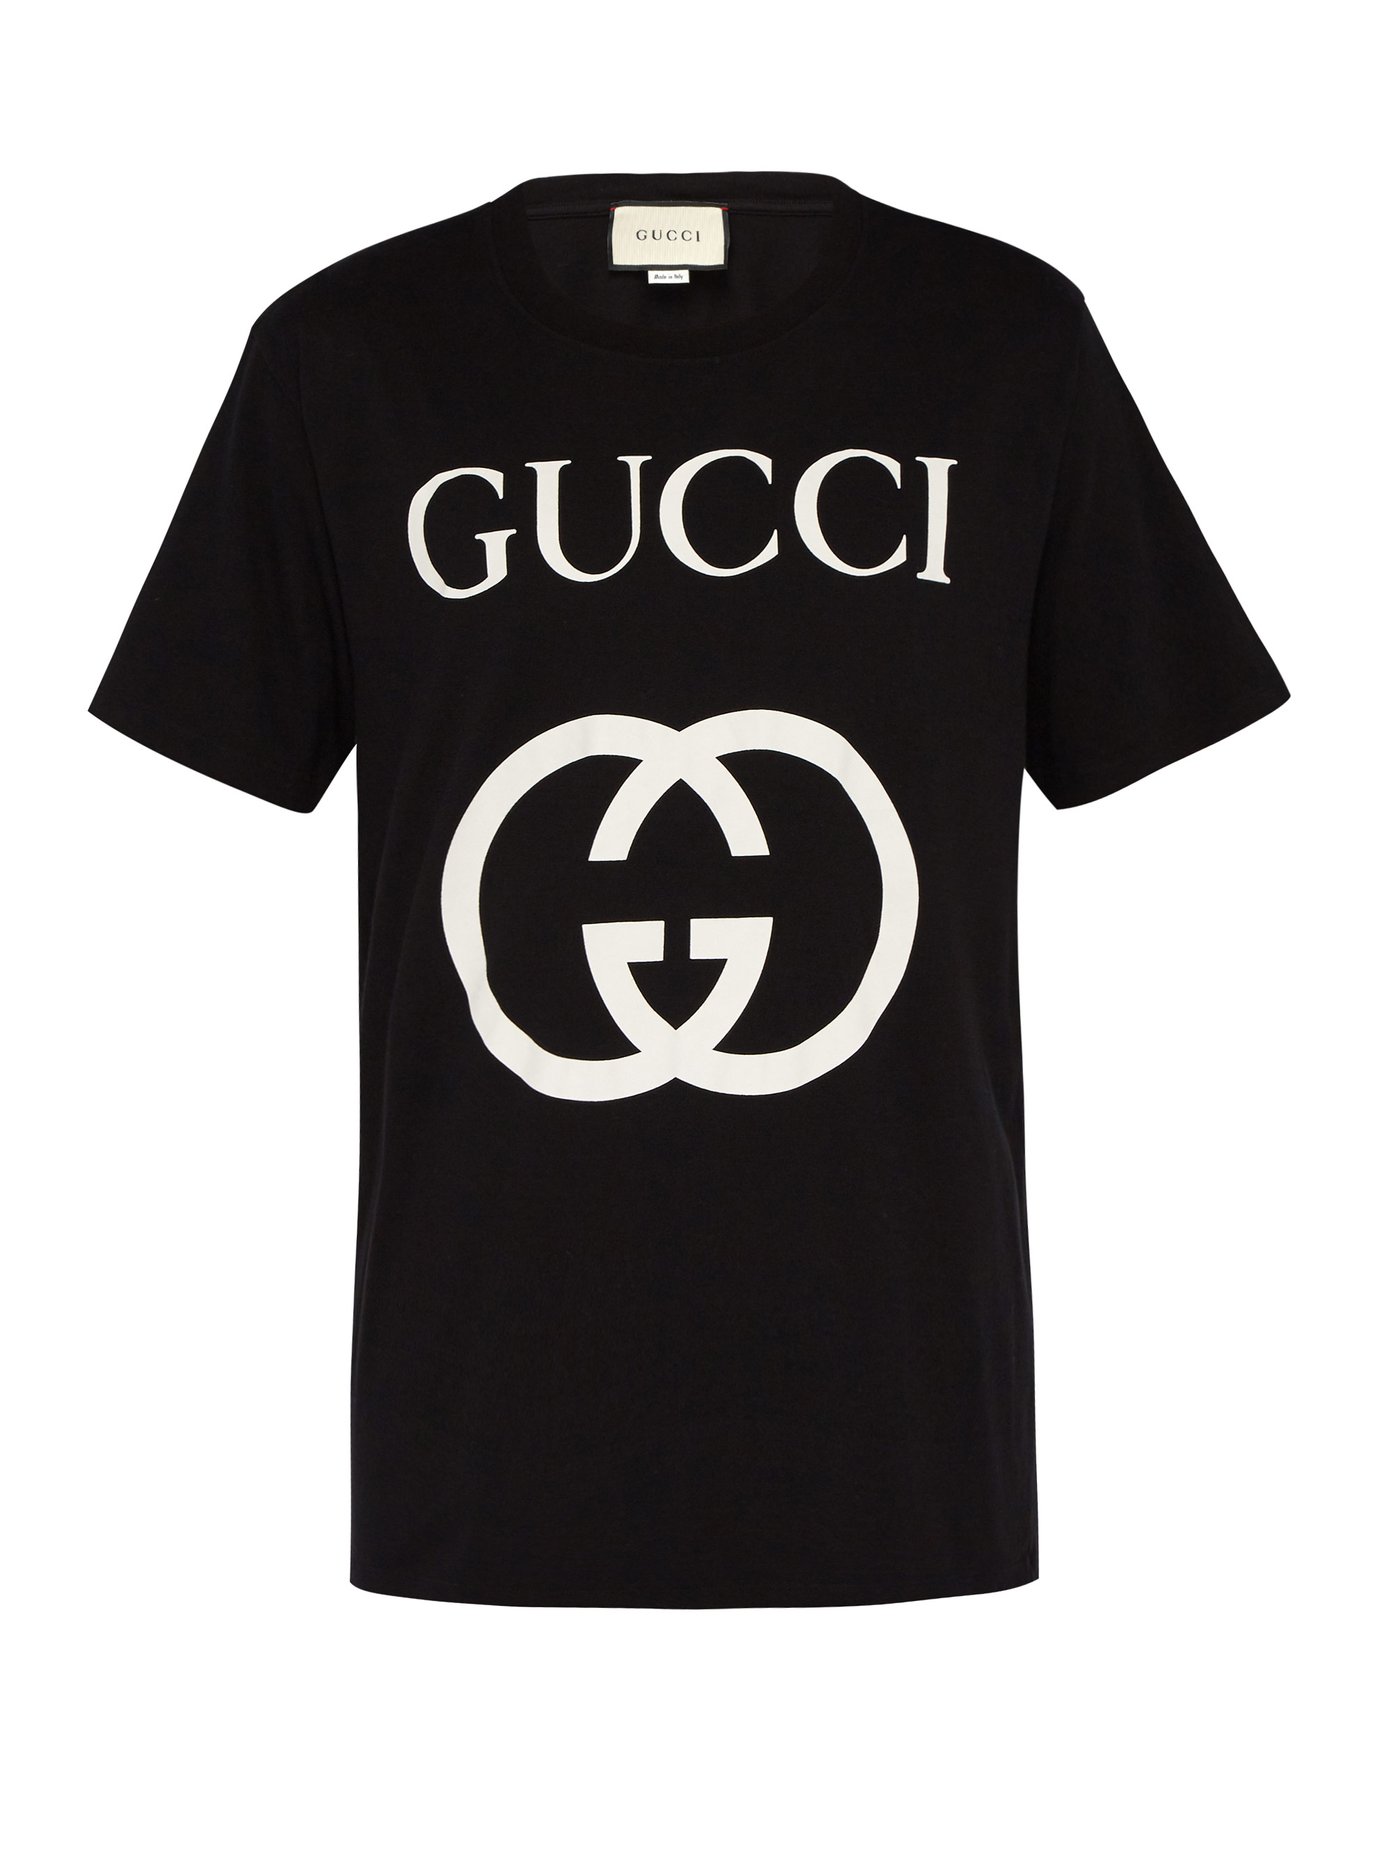 gucci logo t shirt white